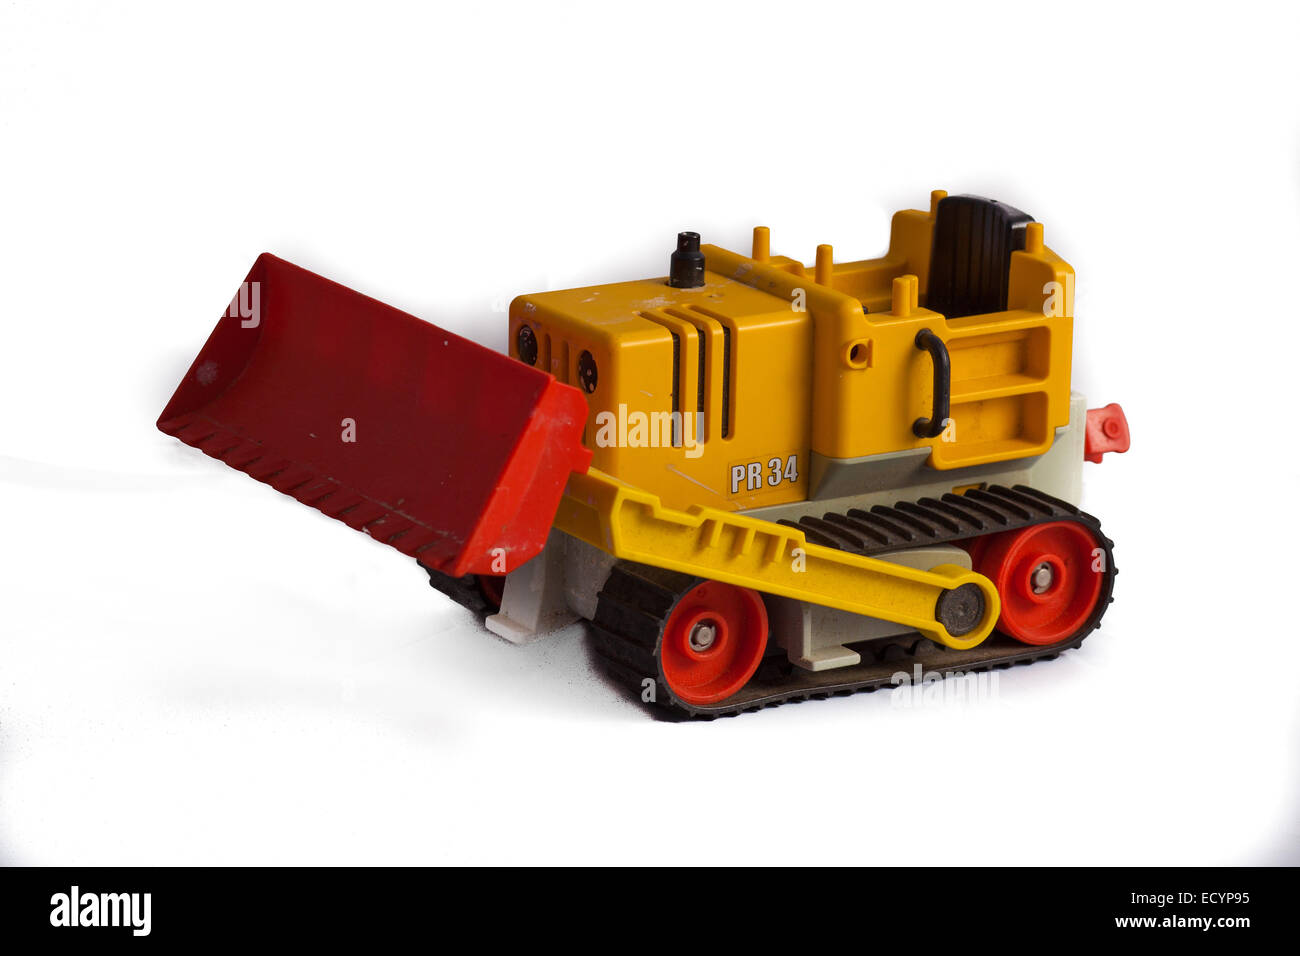 Playmobil bulldozer toy isolated on white background Stock Photo - Alamy